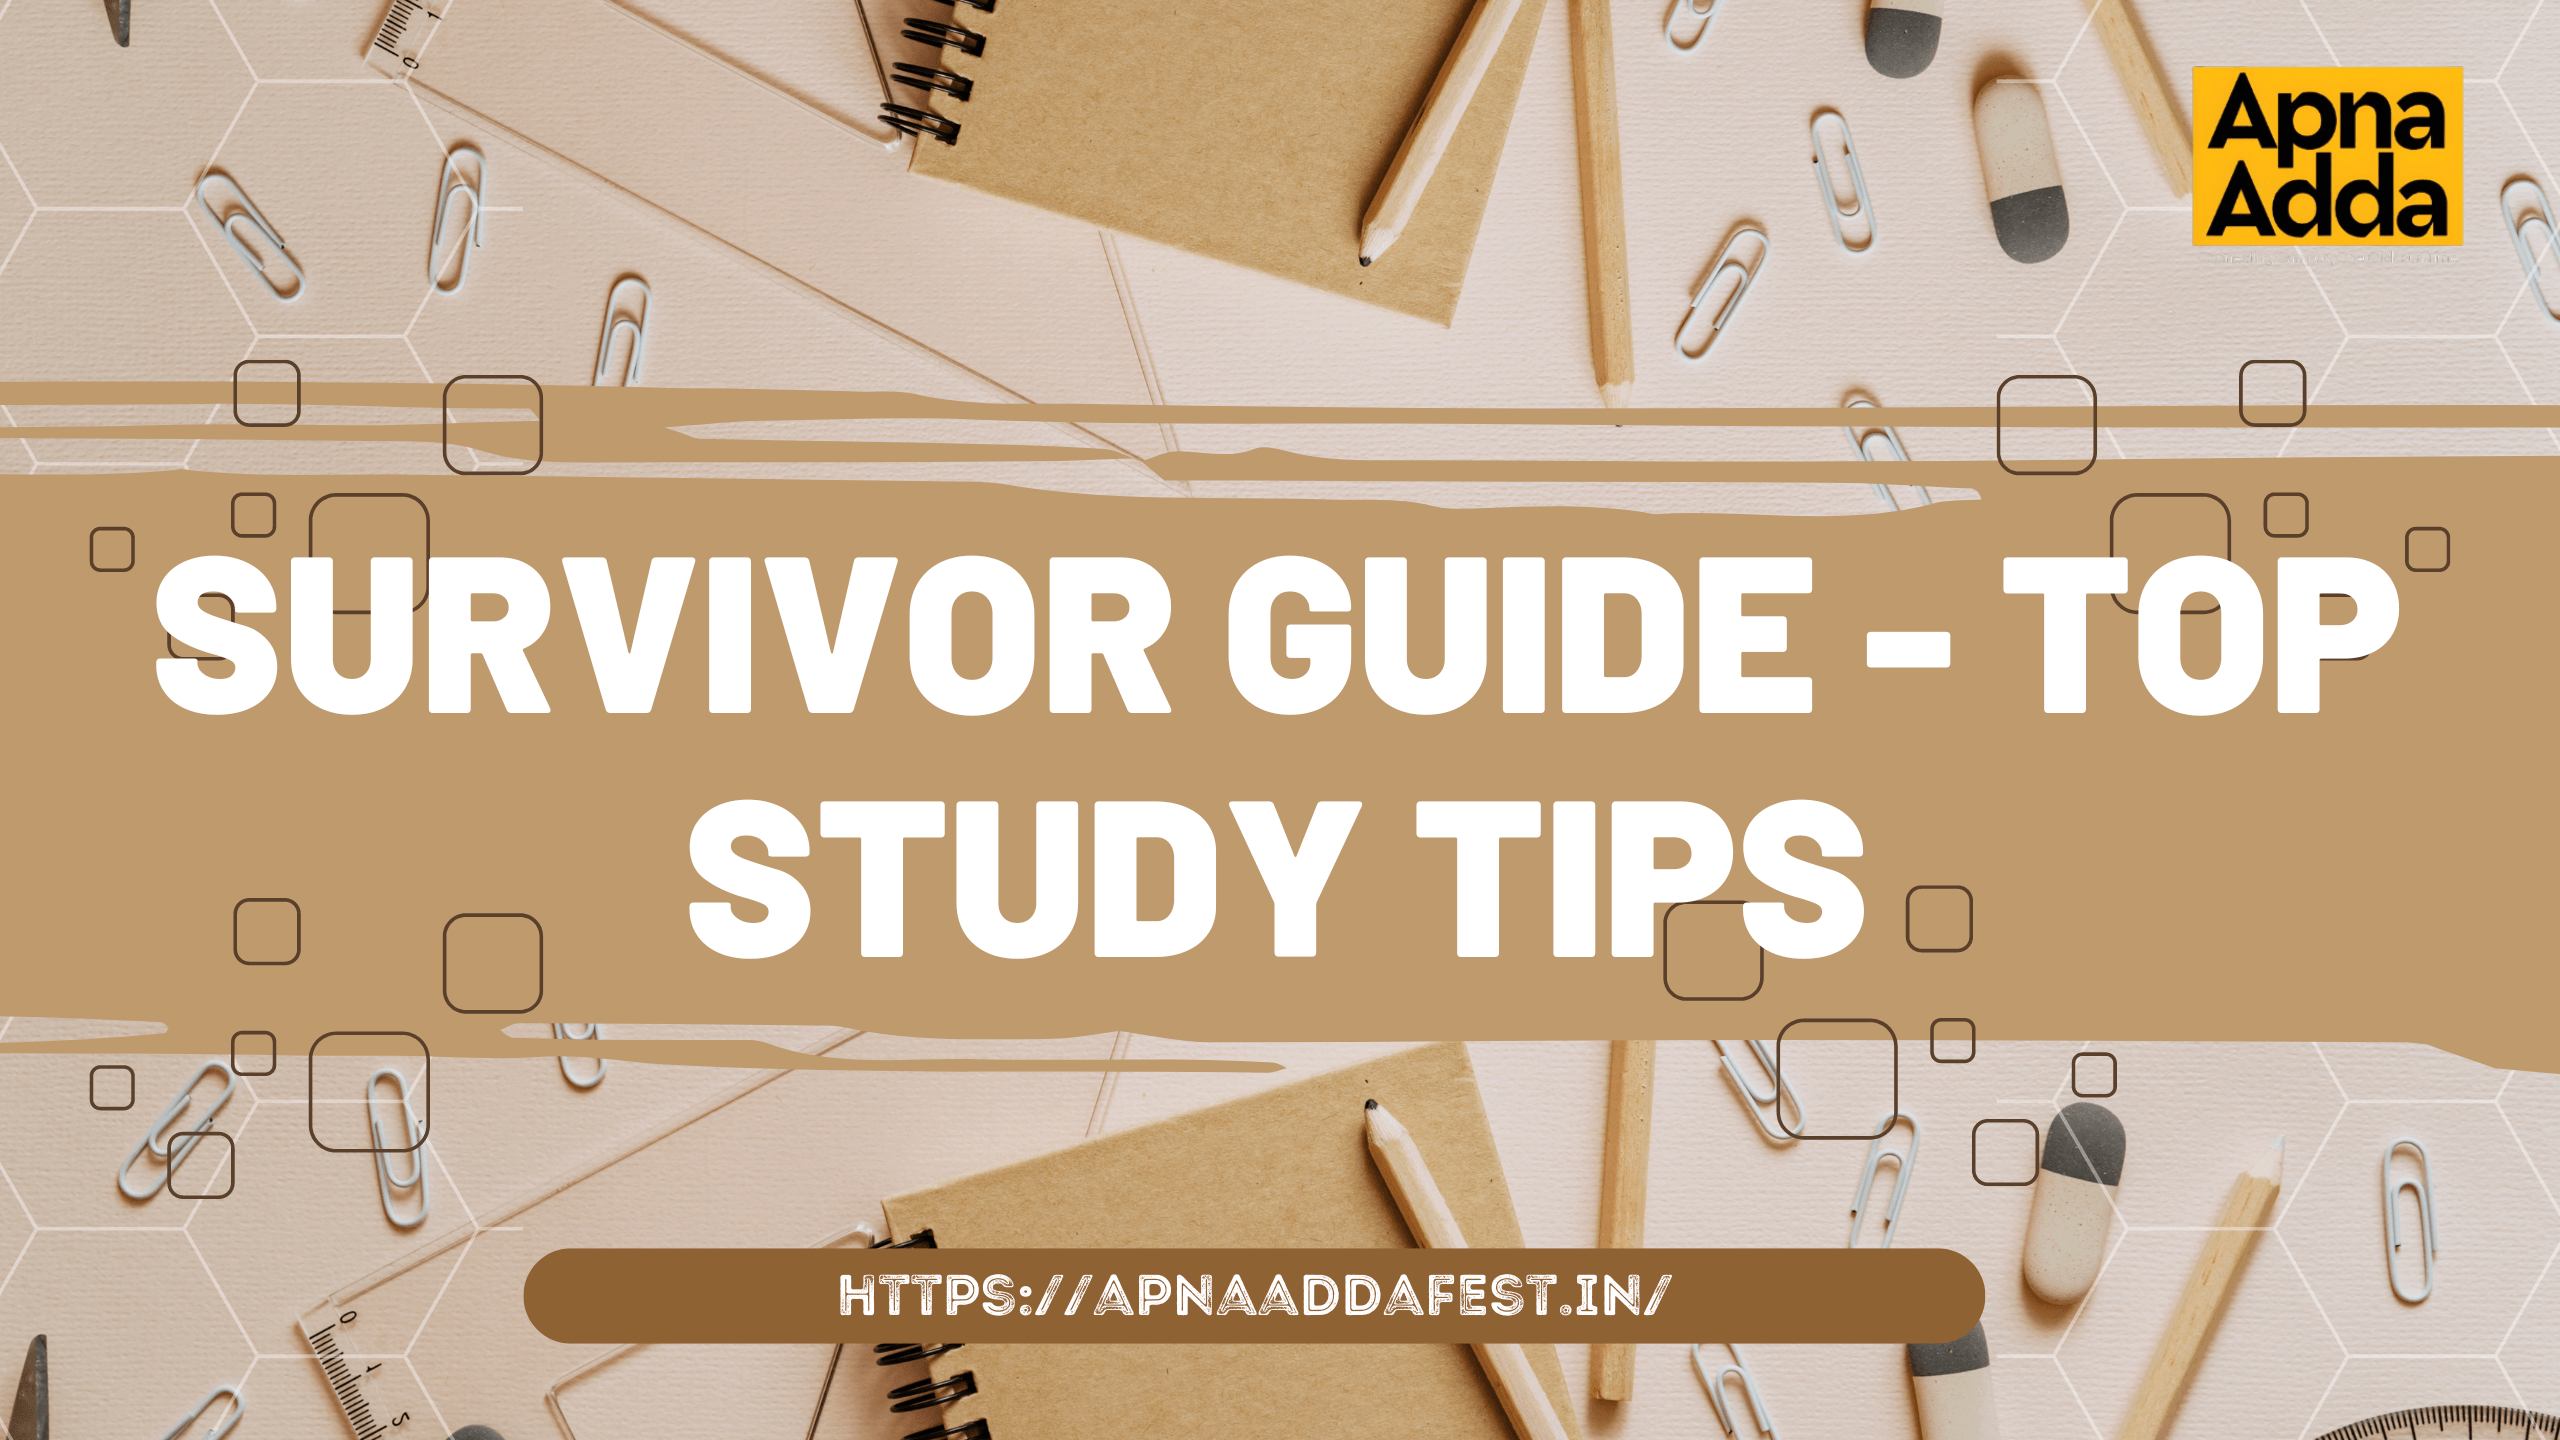                                                                        Top Study Tips